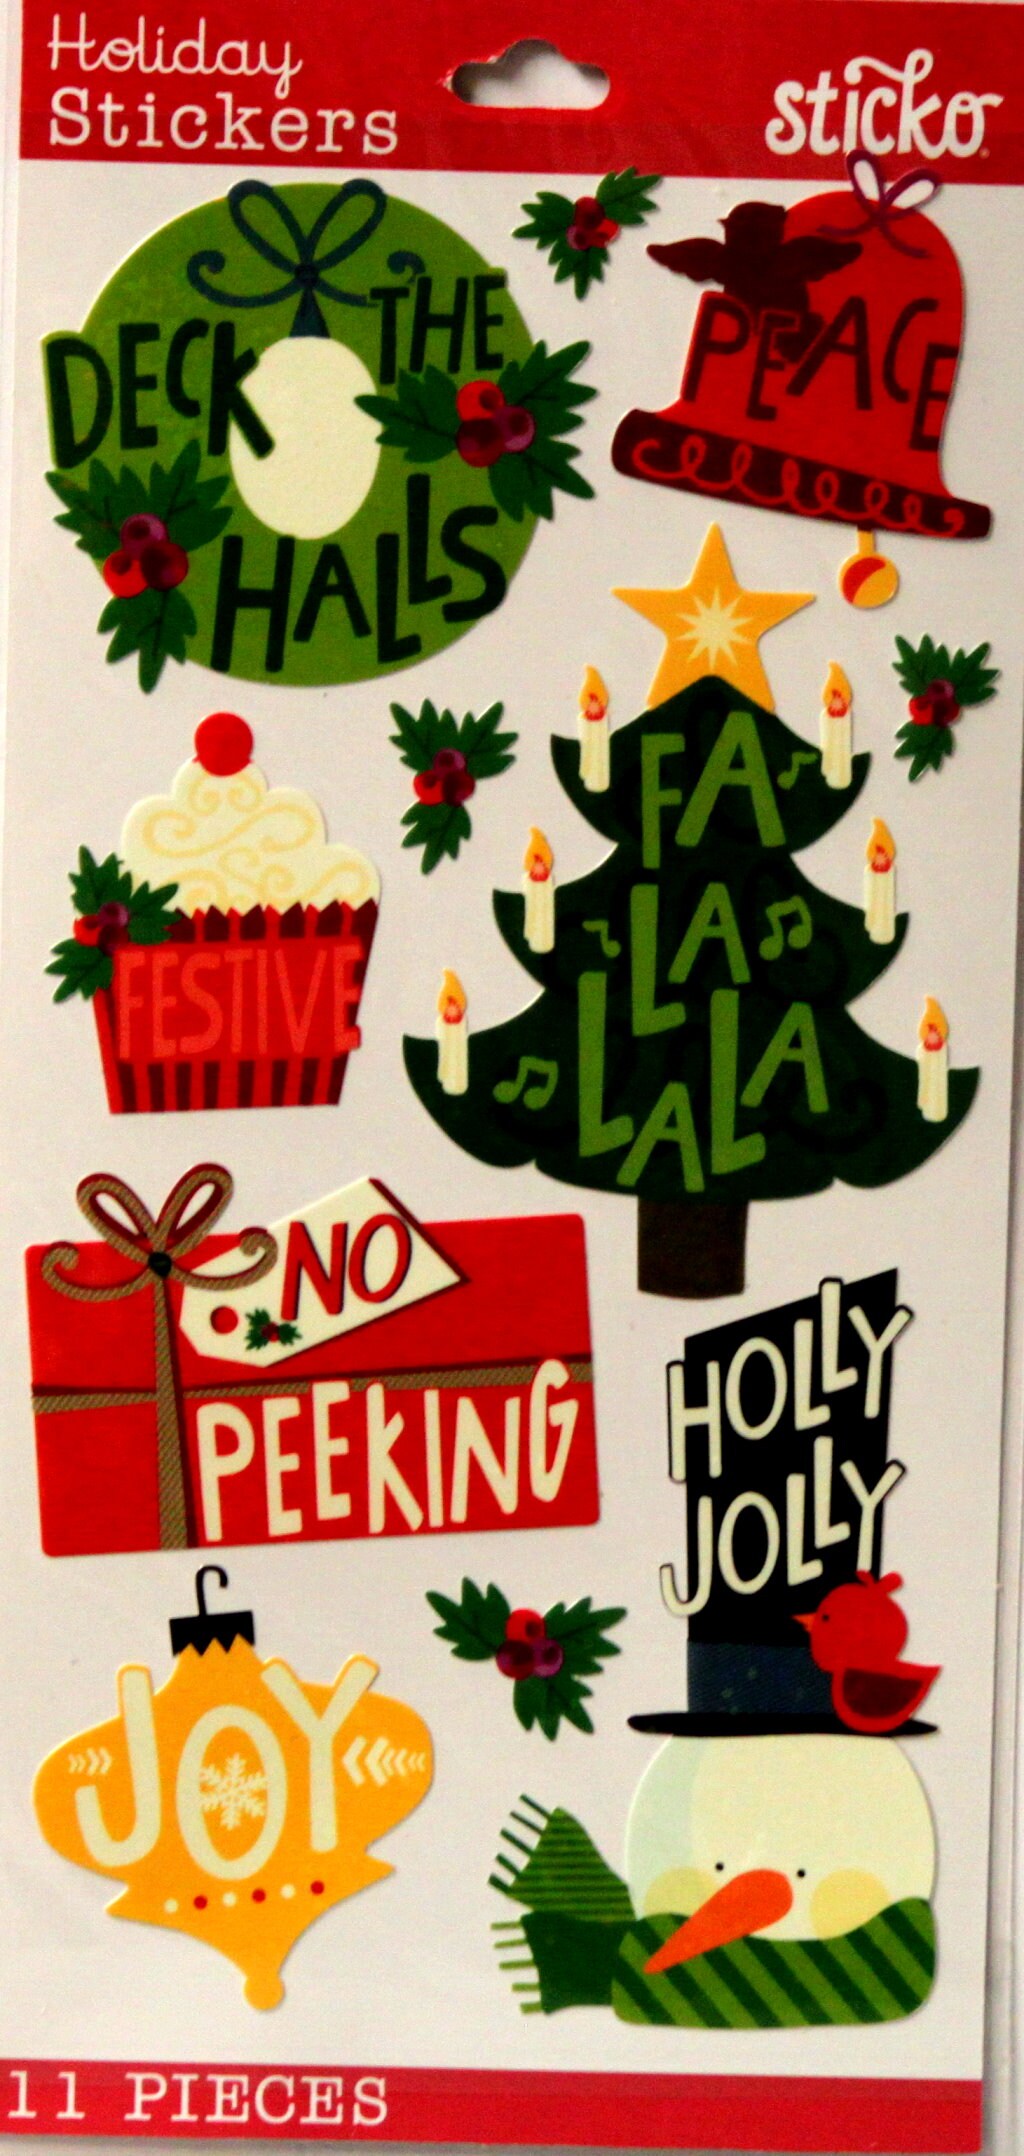 Sticko Holiday Words Prizm Stickers